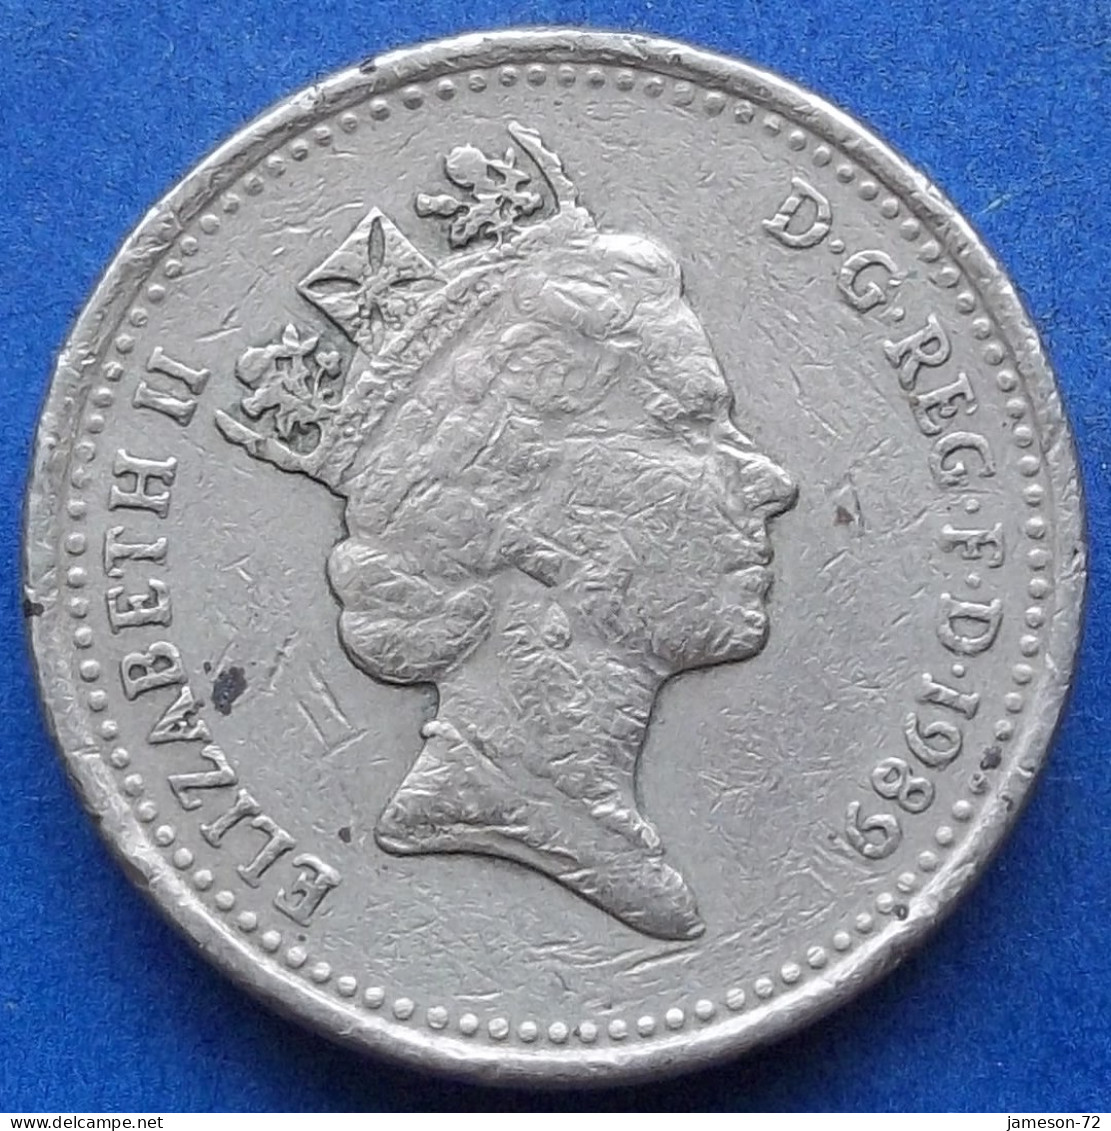 UK - 1 Pound 1989 "Scottish Thistle" KM# 959 Elizabeth II Decimal Coinage (1971-2022) - Edelweiss Coins - 1 Pond